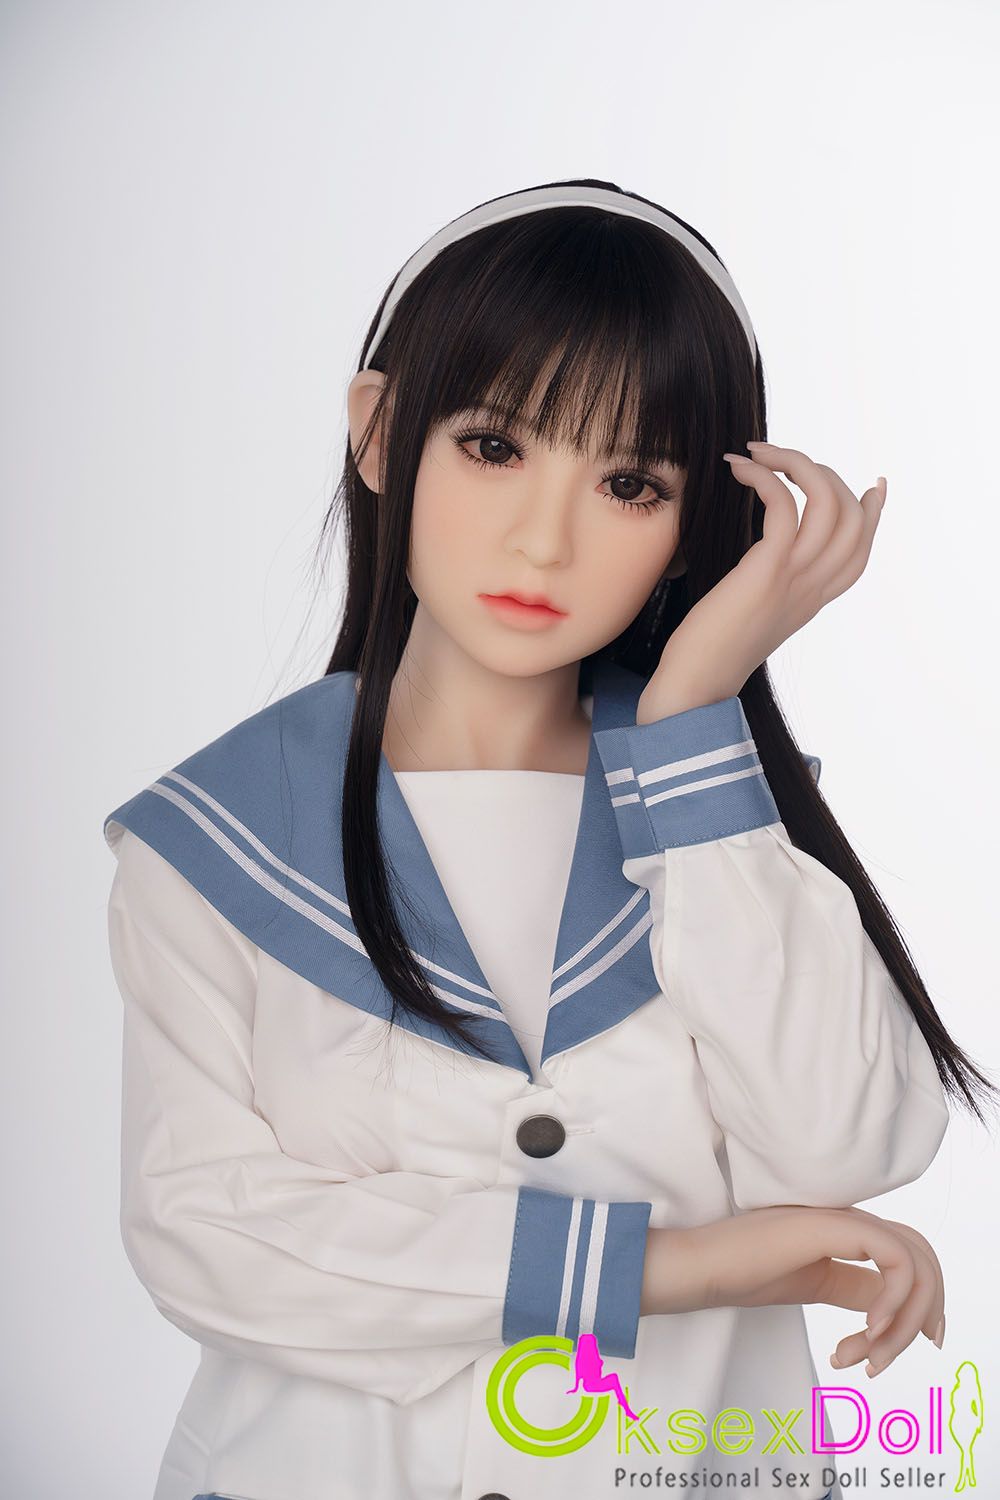 Japanese Schoolgirl Sex Doll pic